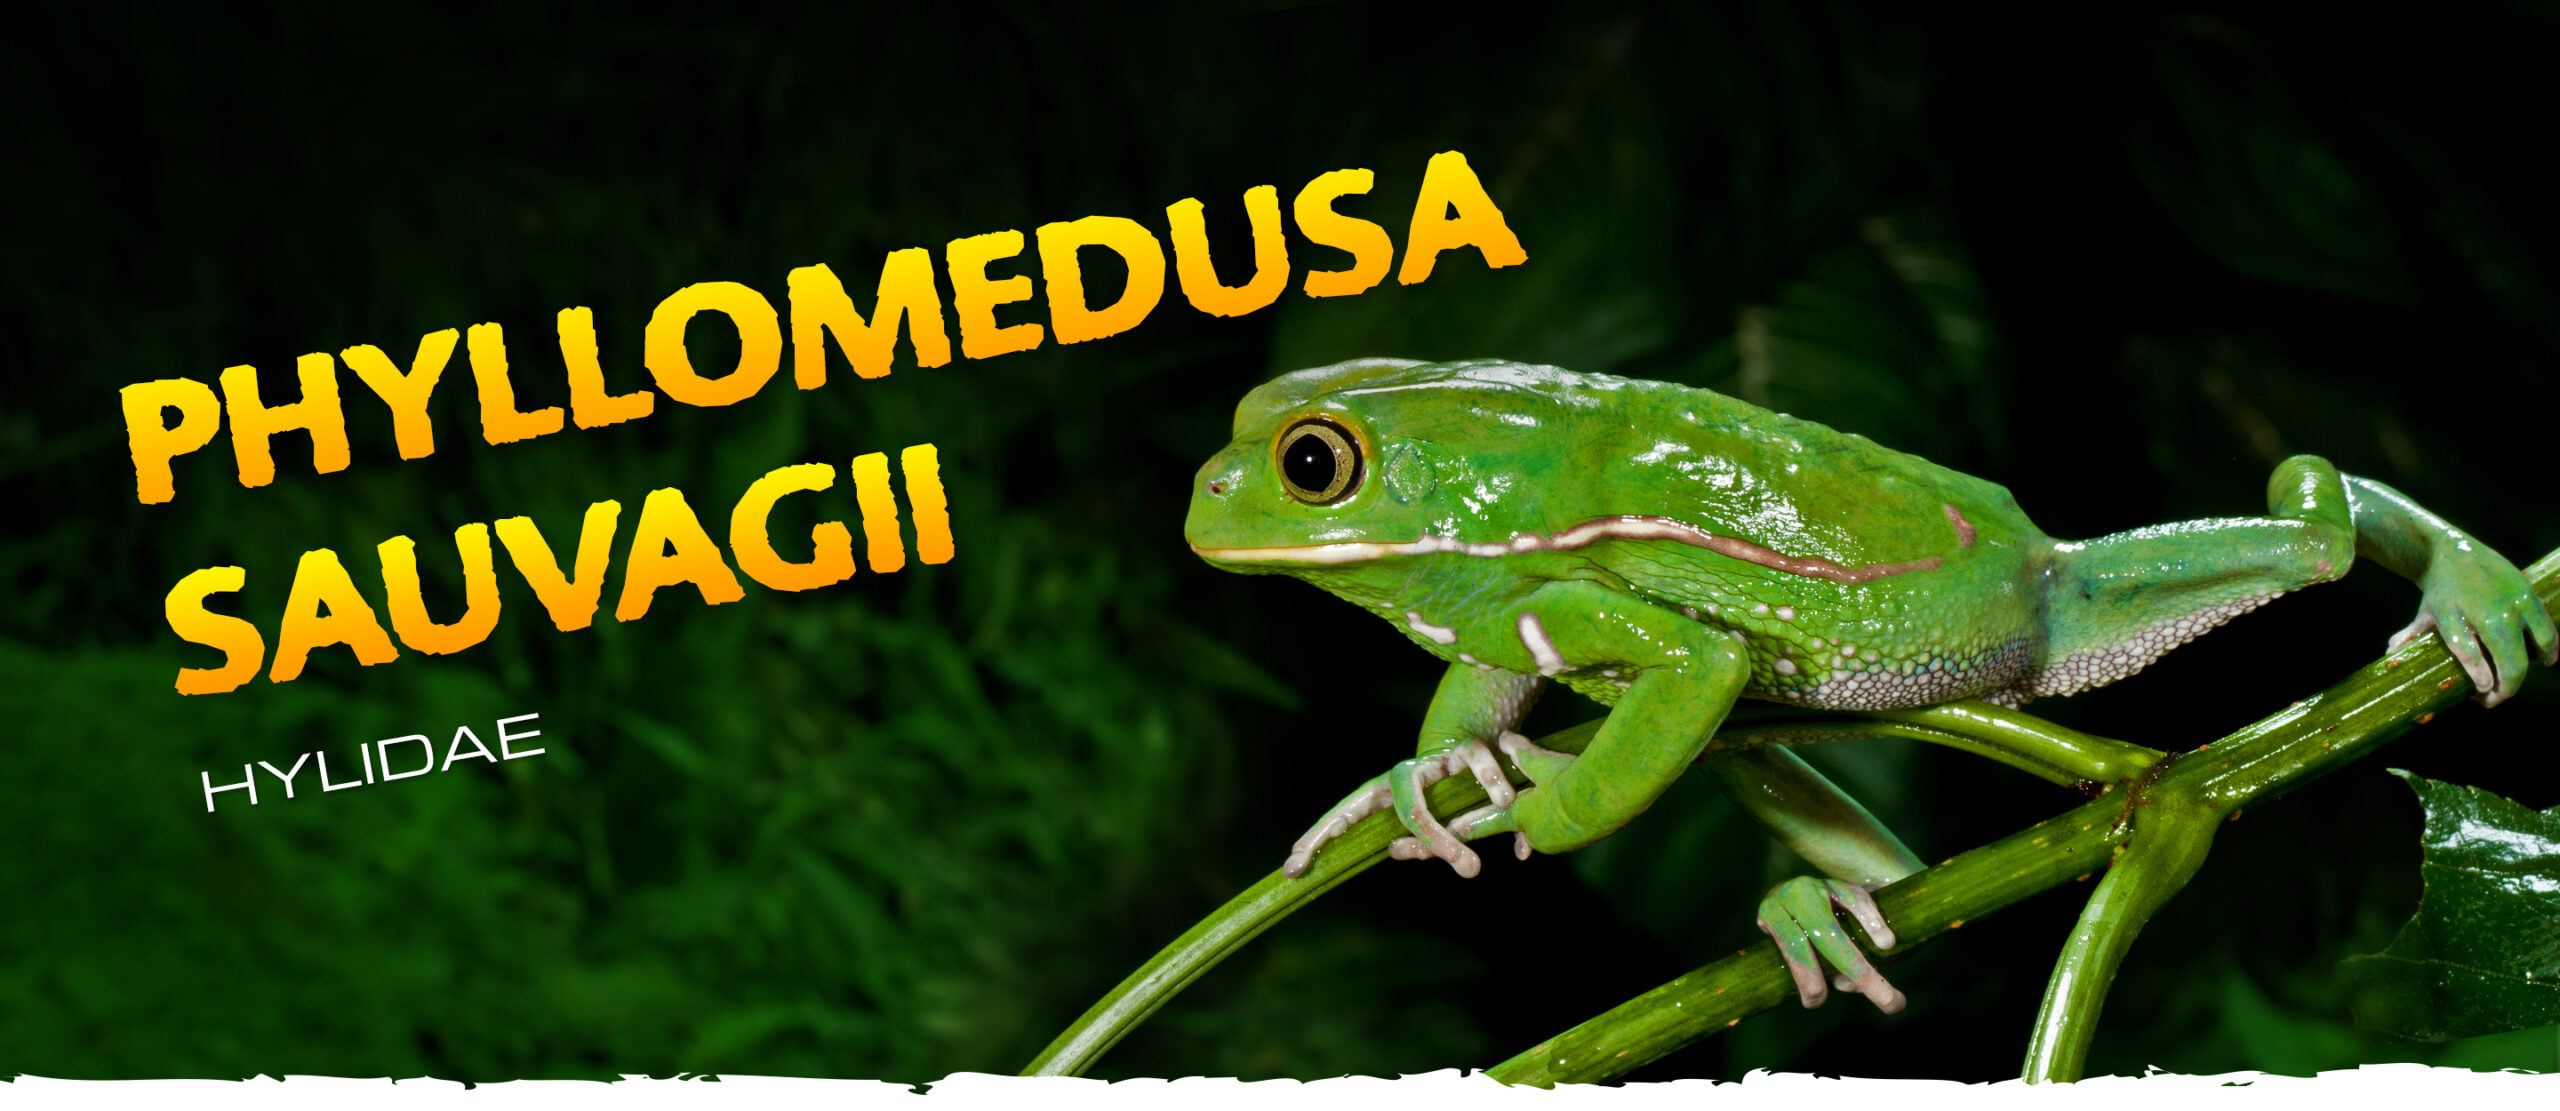 Phyllomedusa sauvagii - Frogs & Co